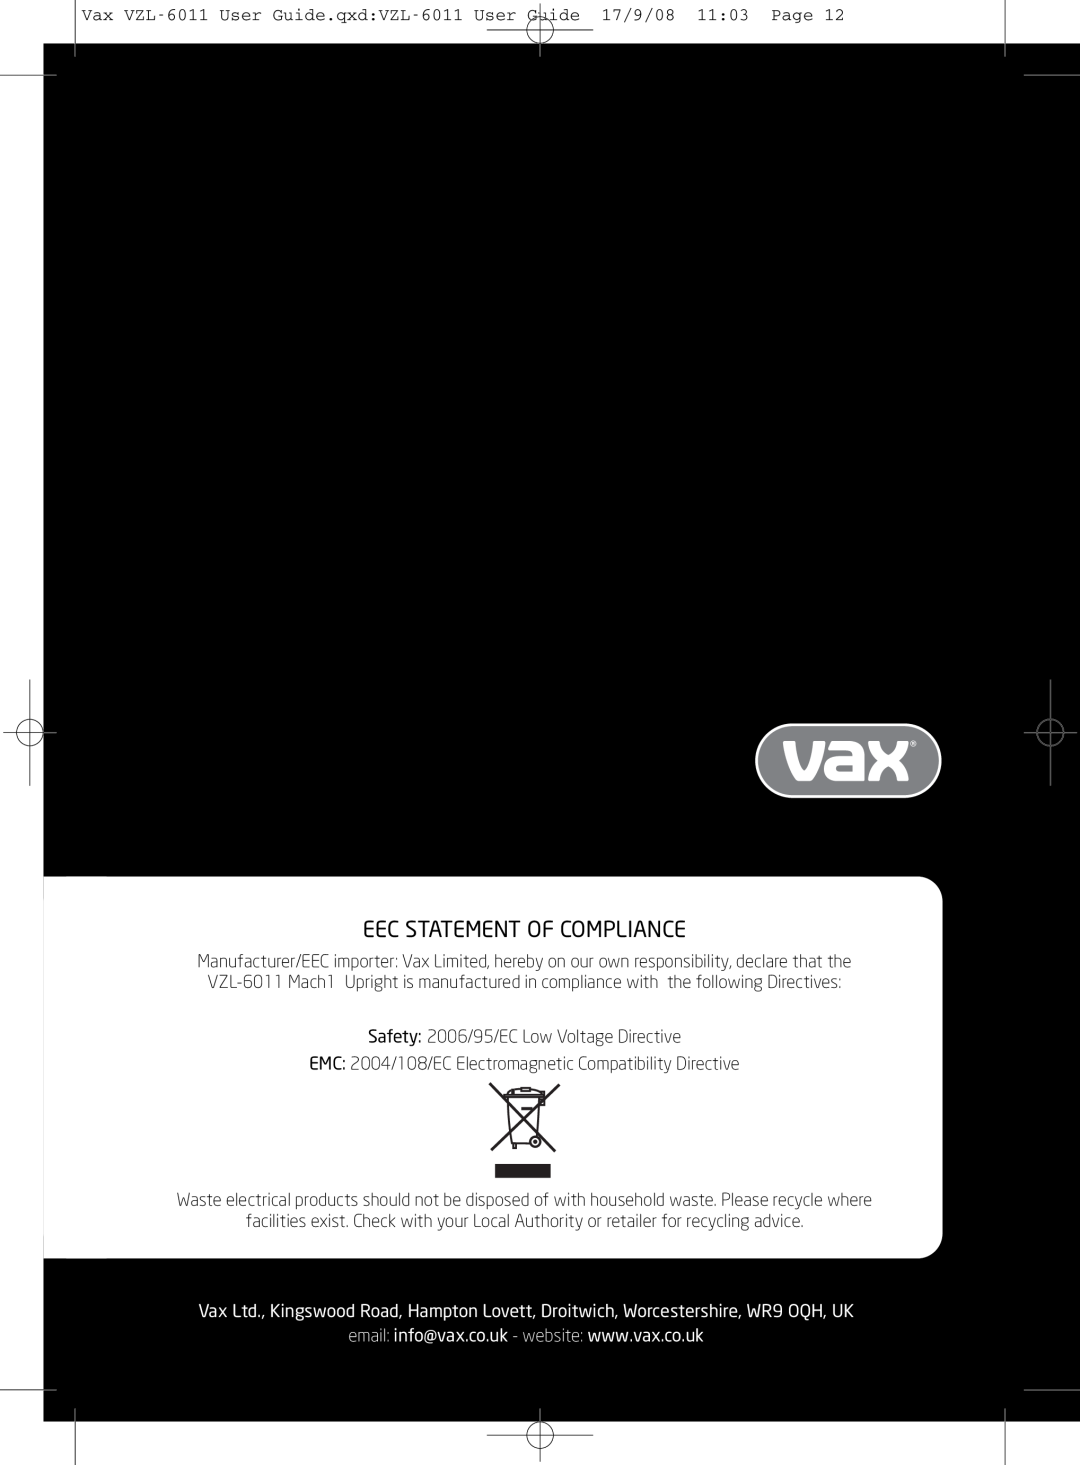 Vizio VZL-6011 instruction manual Eec Statement Of Compliance 